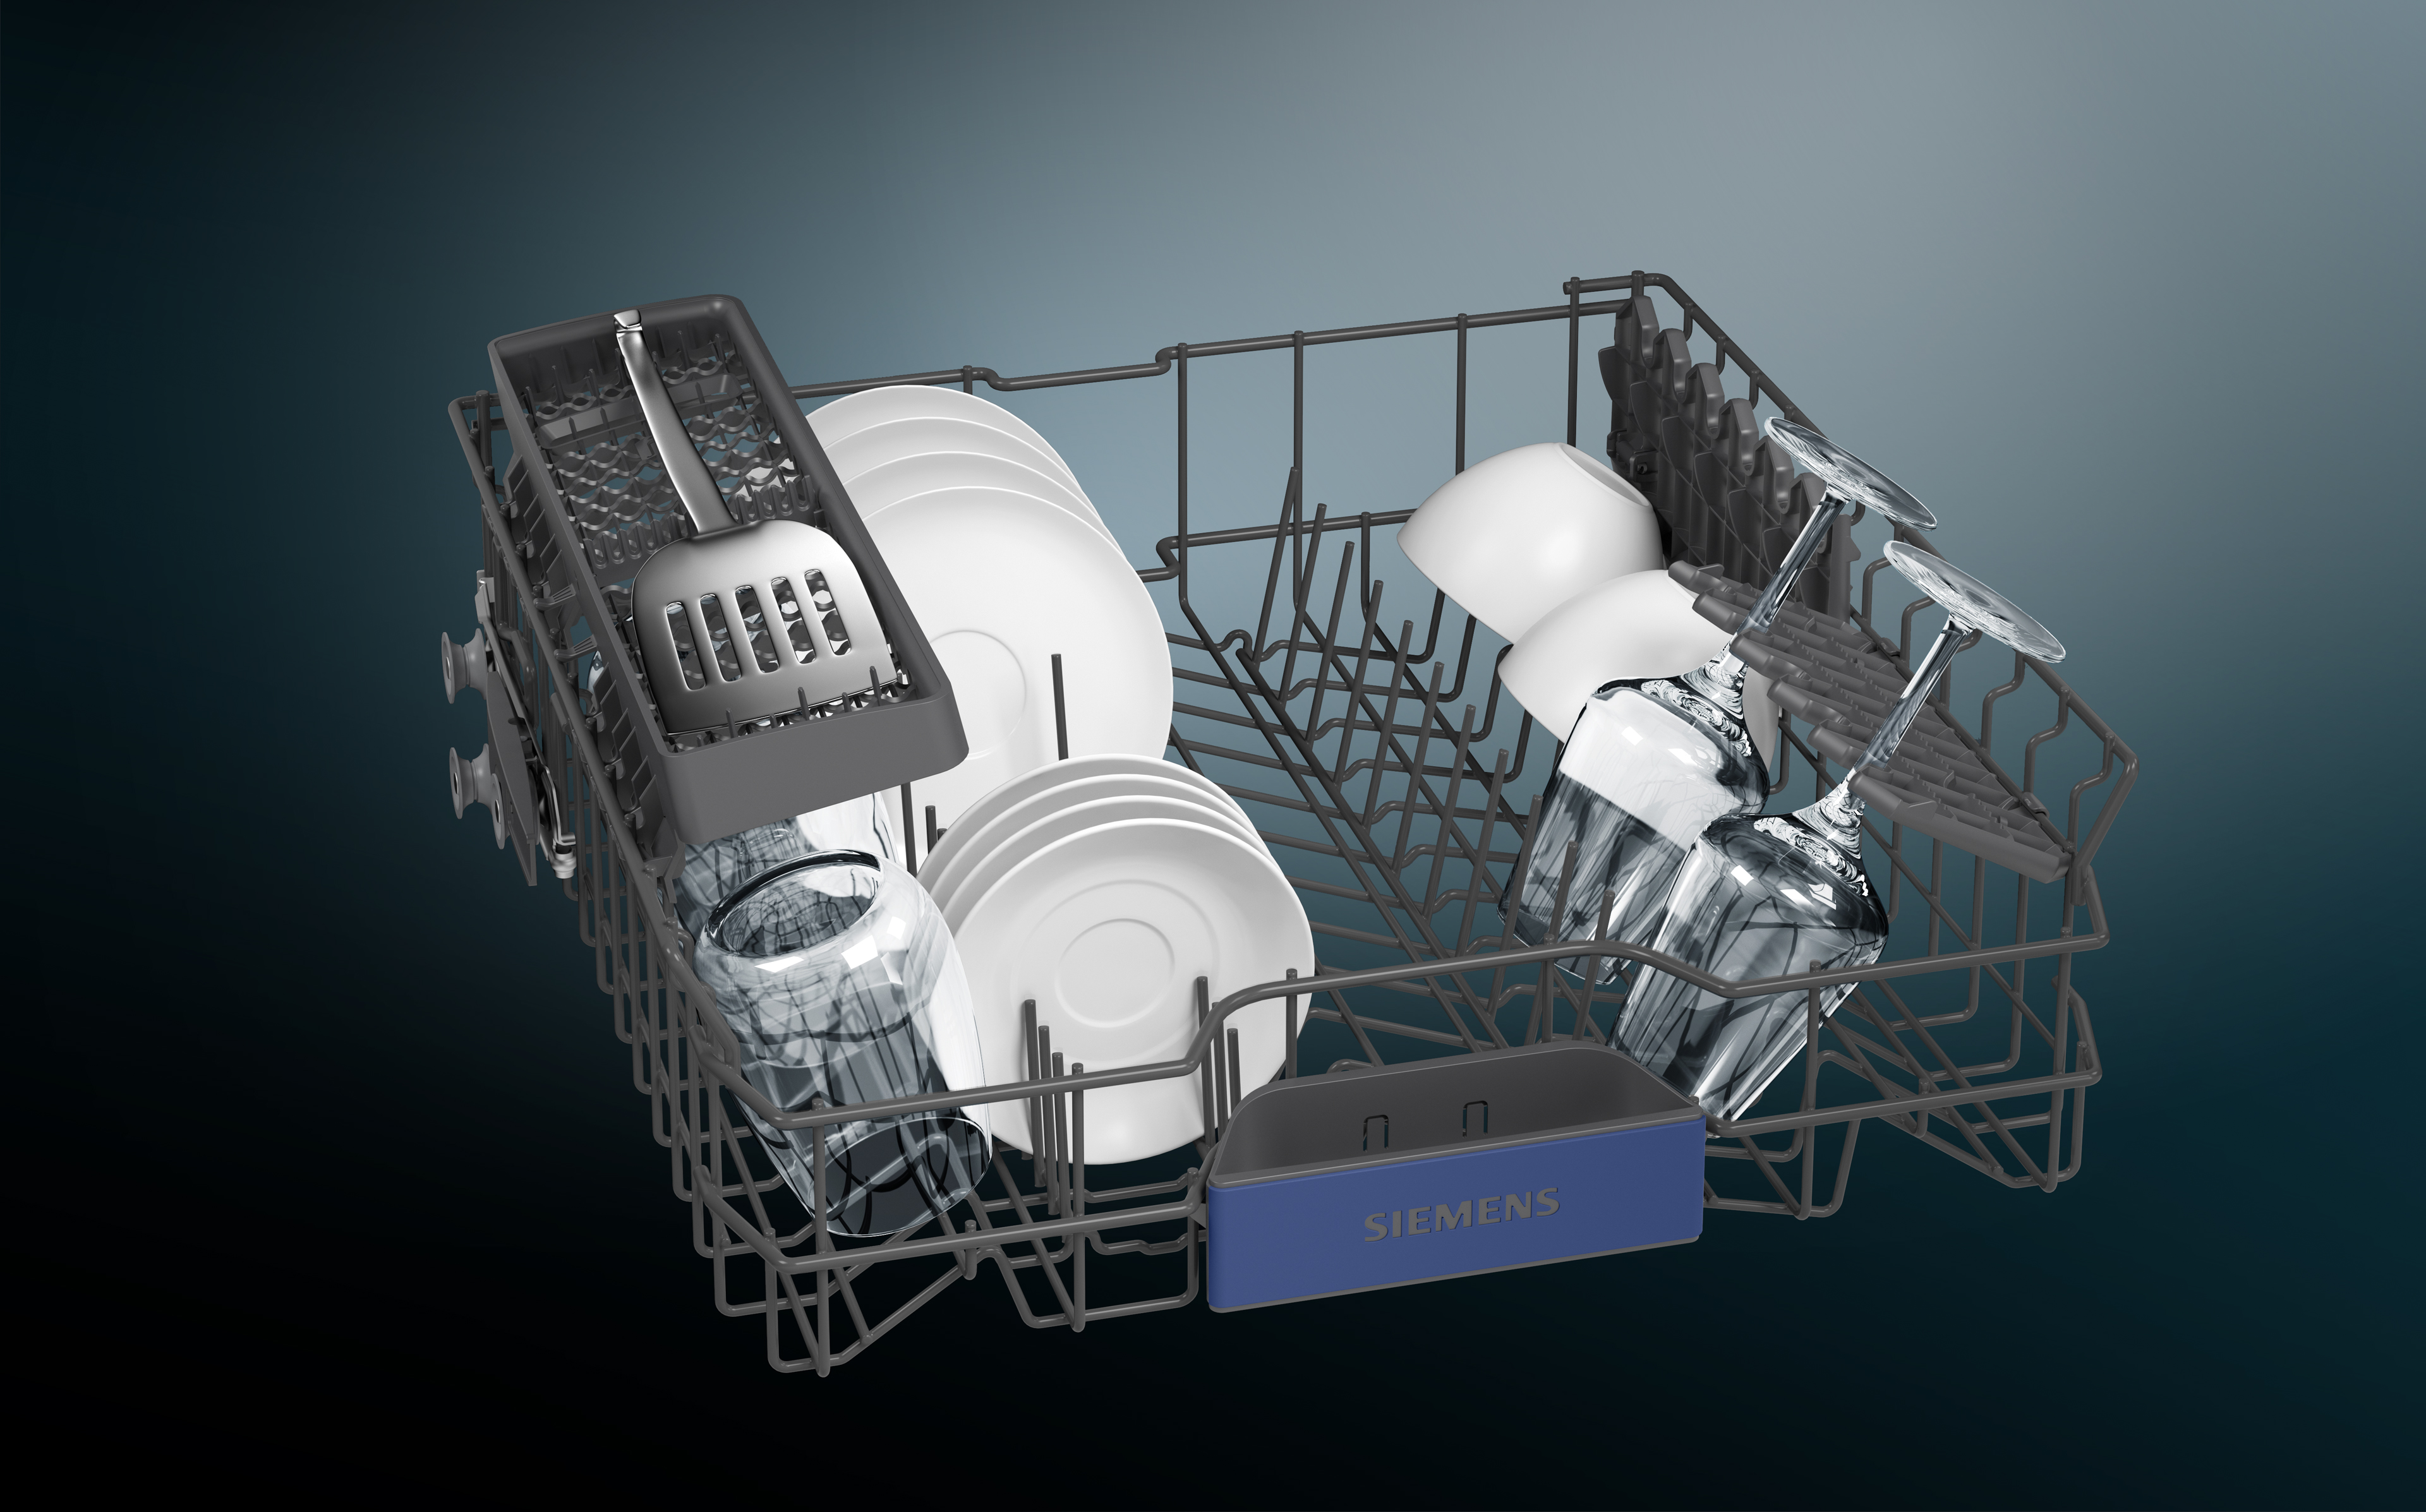 Siemens iQ100 Fully-Integrated Dishwasher 60cm SN61HX03KG - Posh Import